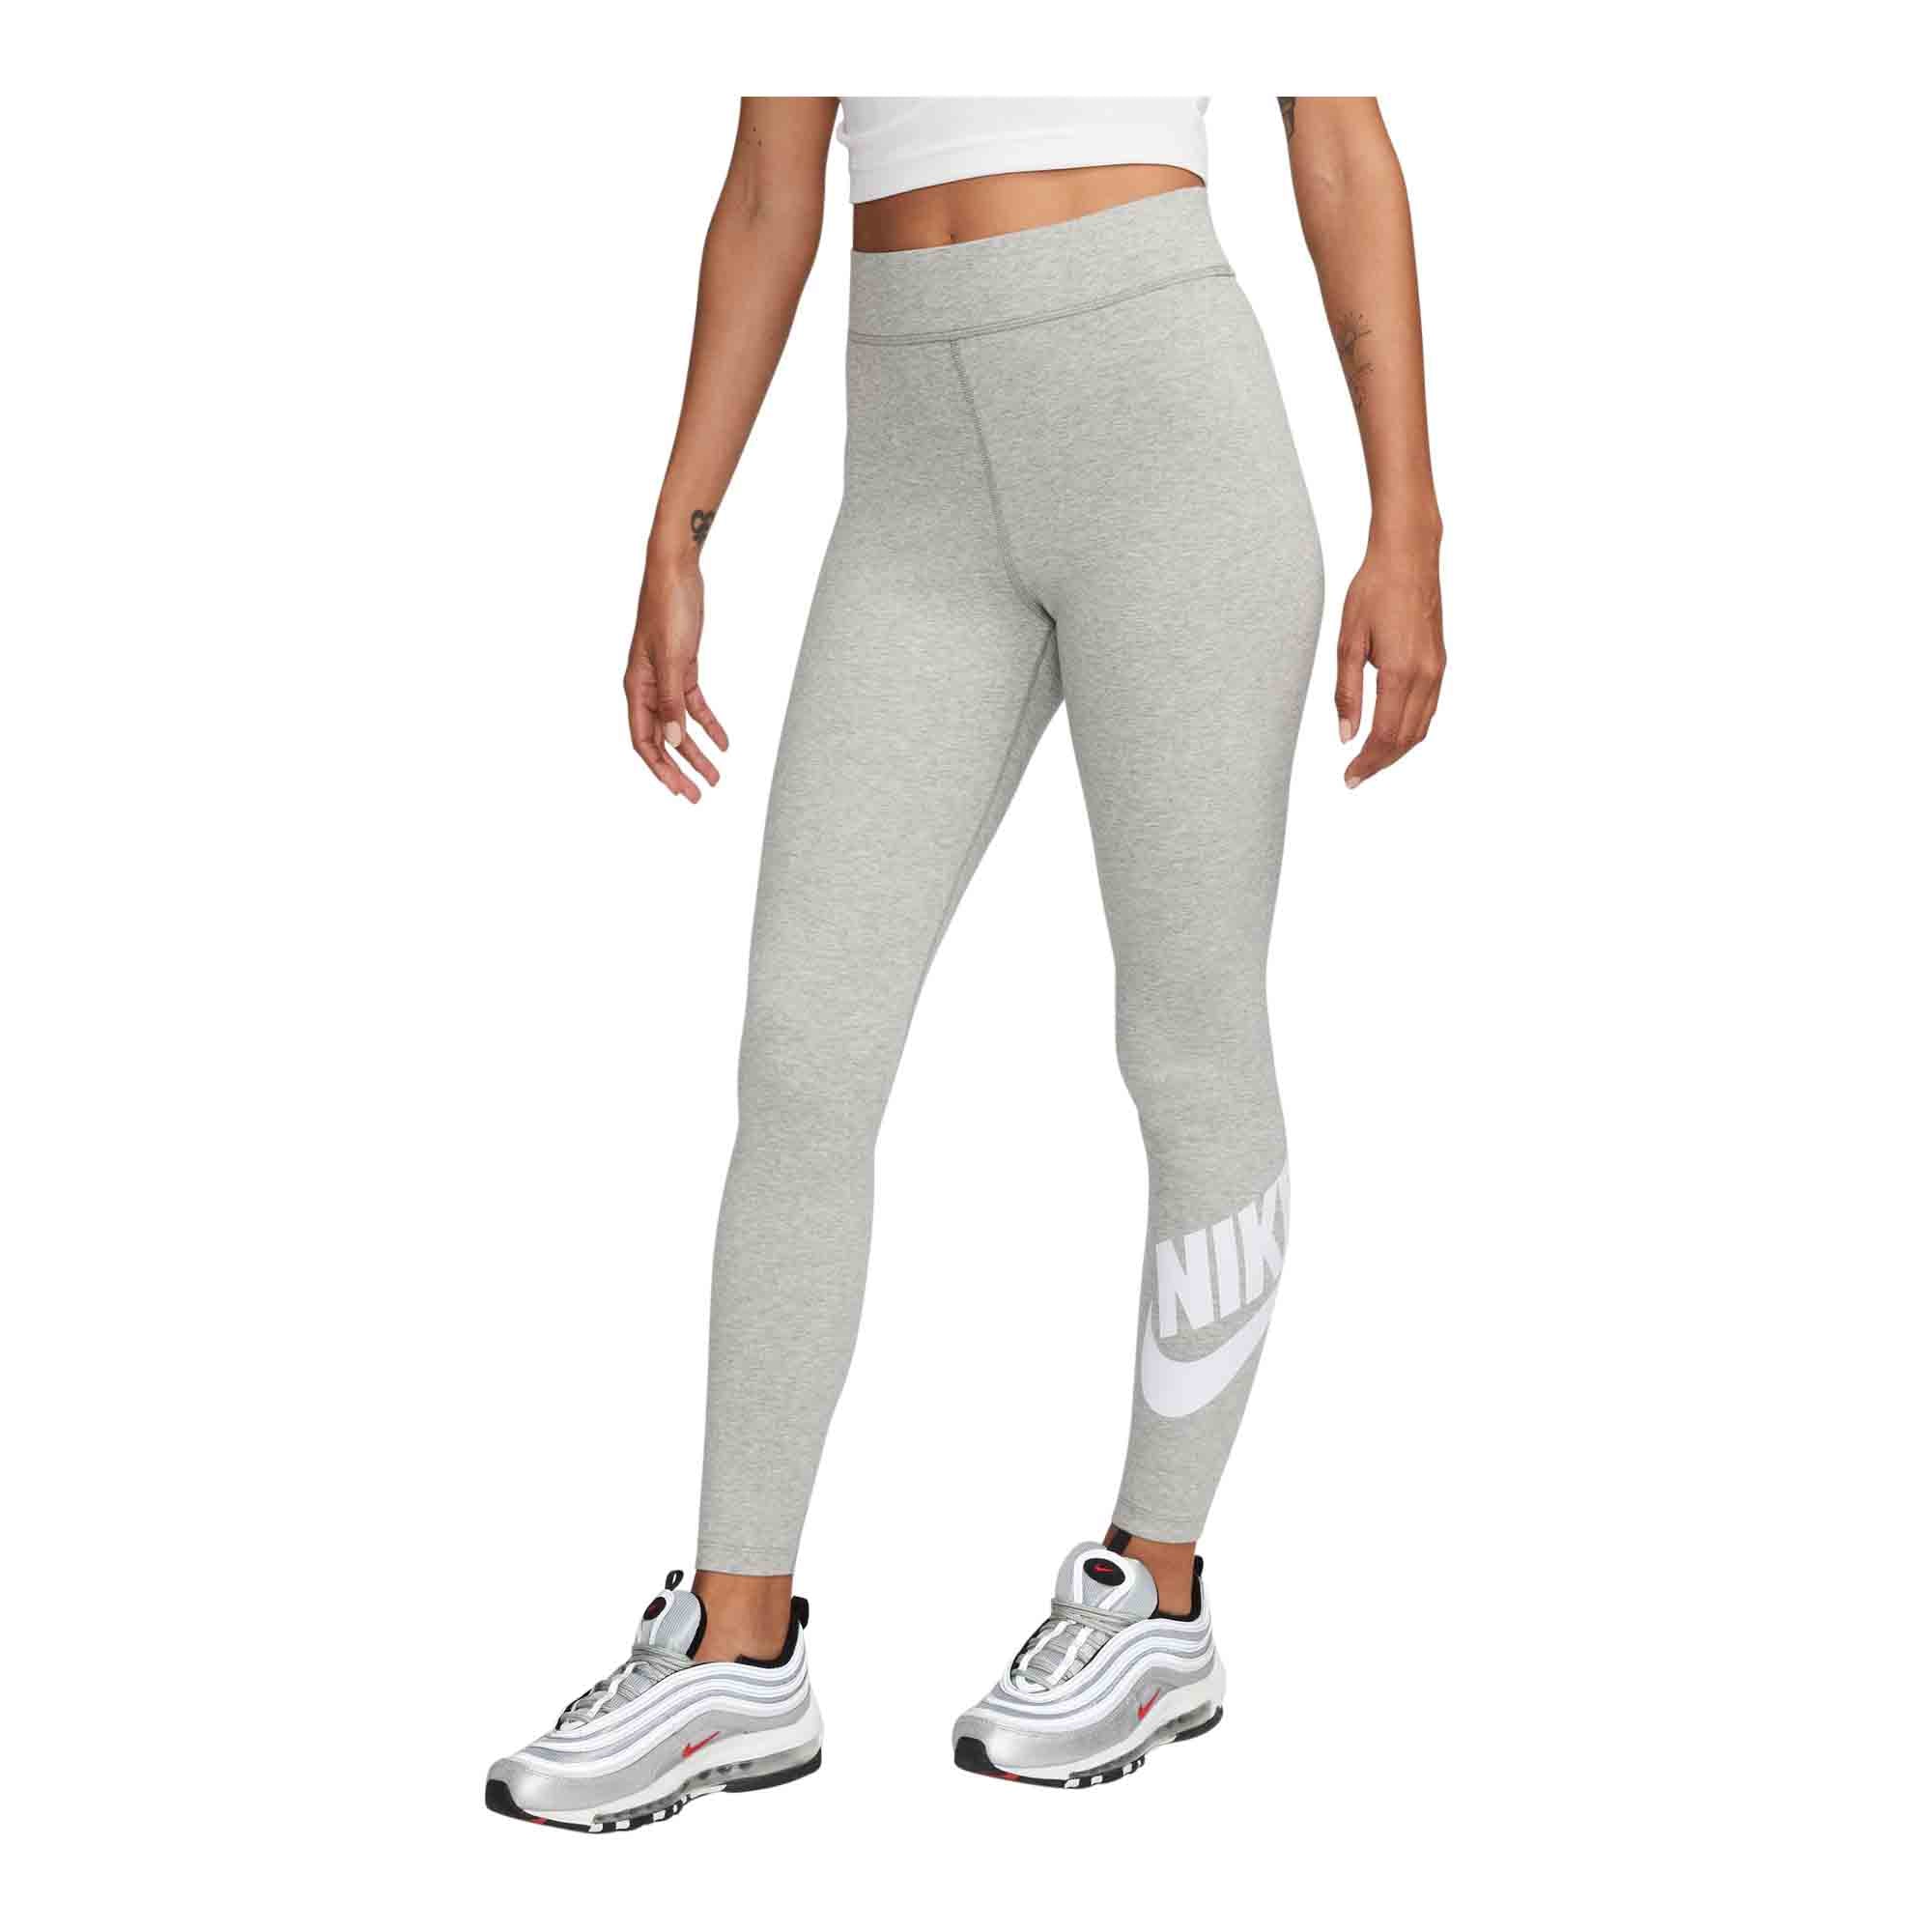 Nike flare leggings Size medium #nike #flare - Depop